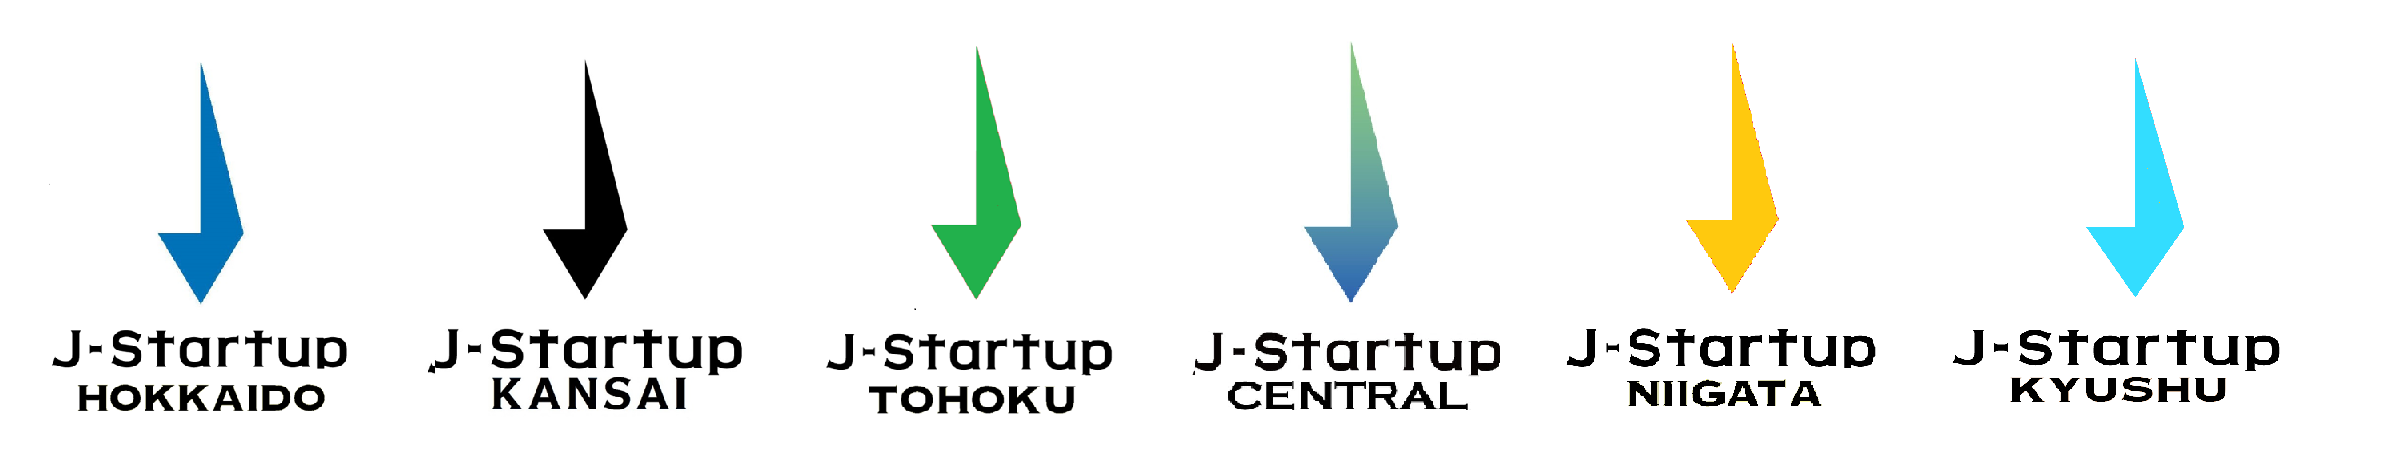 j-startup